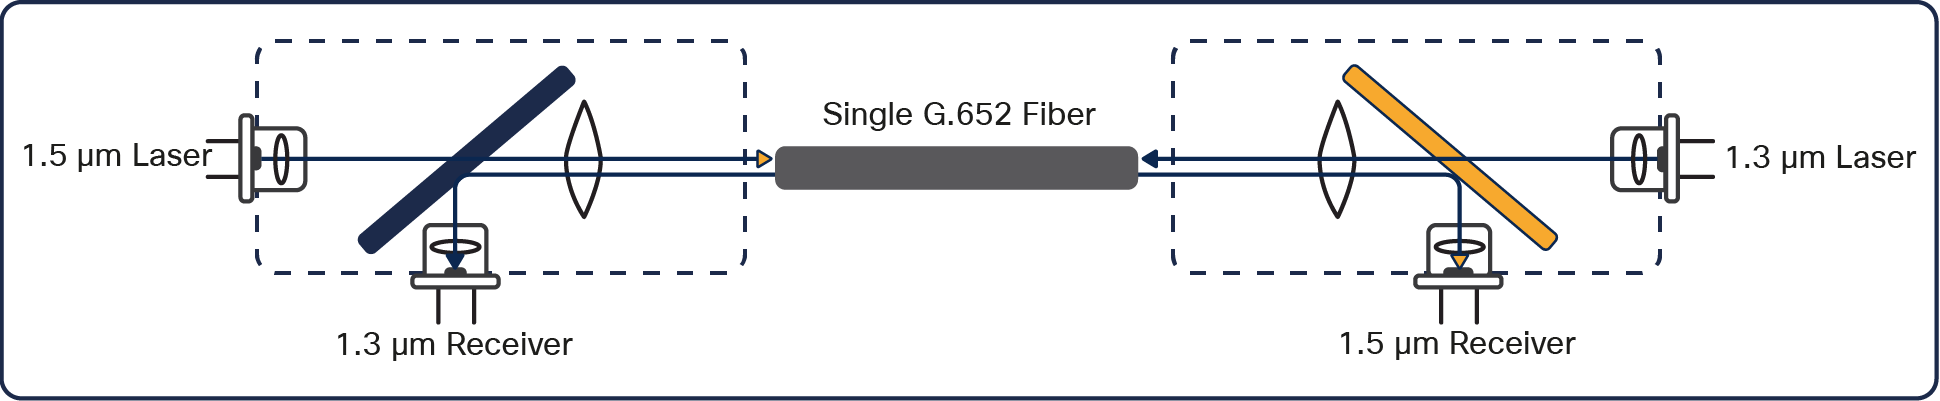 Bidirectional transmission of a single strand of SMF